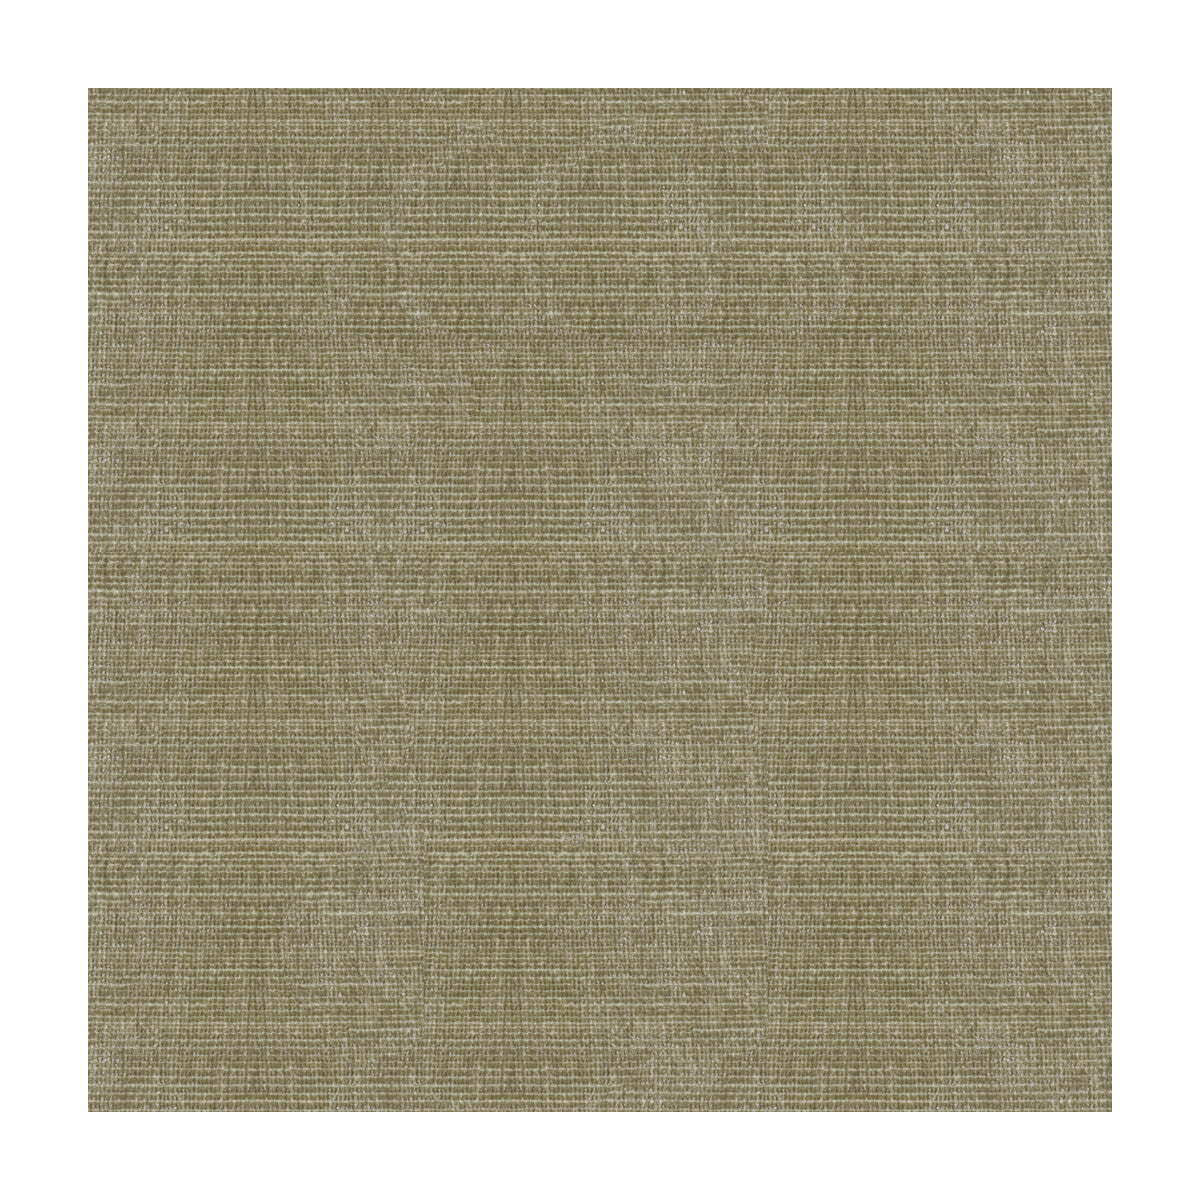 Kravet Smart fabric in 34191-2111 color - pattern 34191.2111.0 - by Kravet Smart